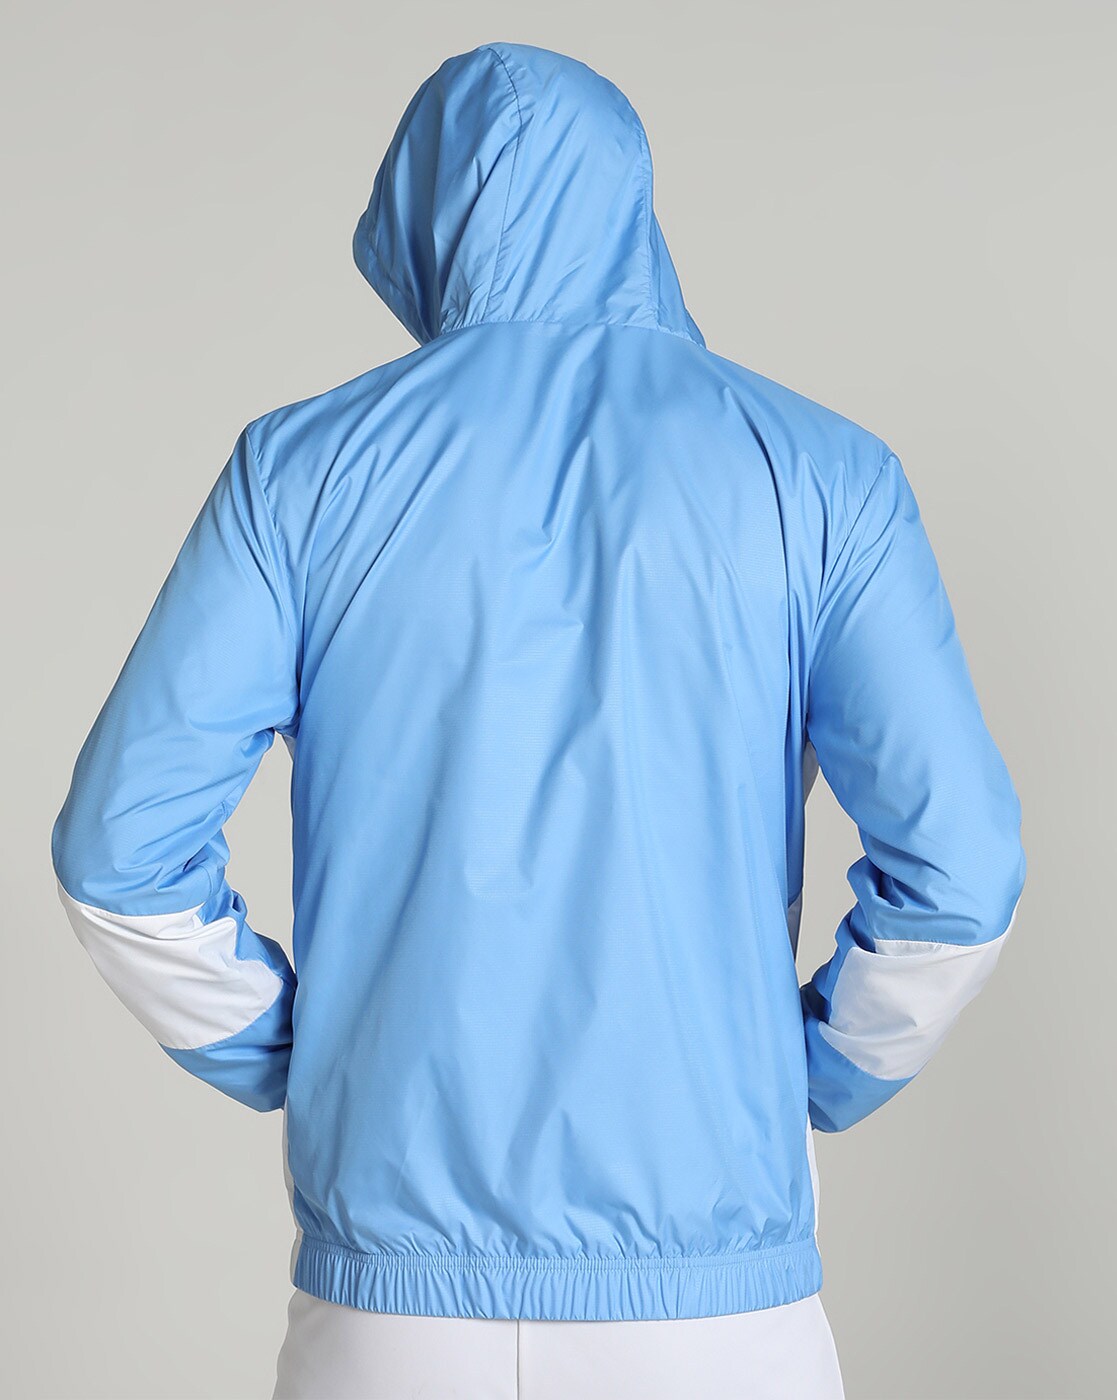 Block-coloured baseball jacket - Navy blue/White - Ladies | H&M IN